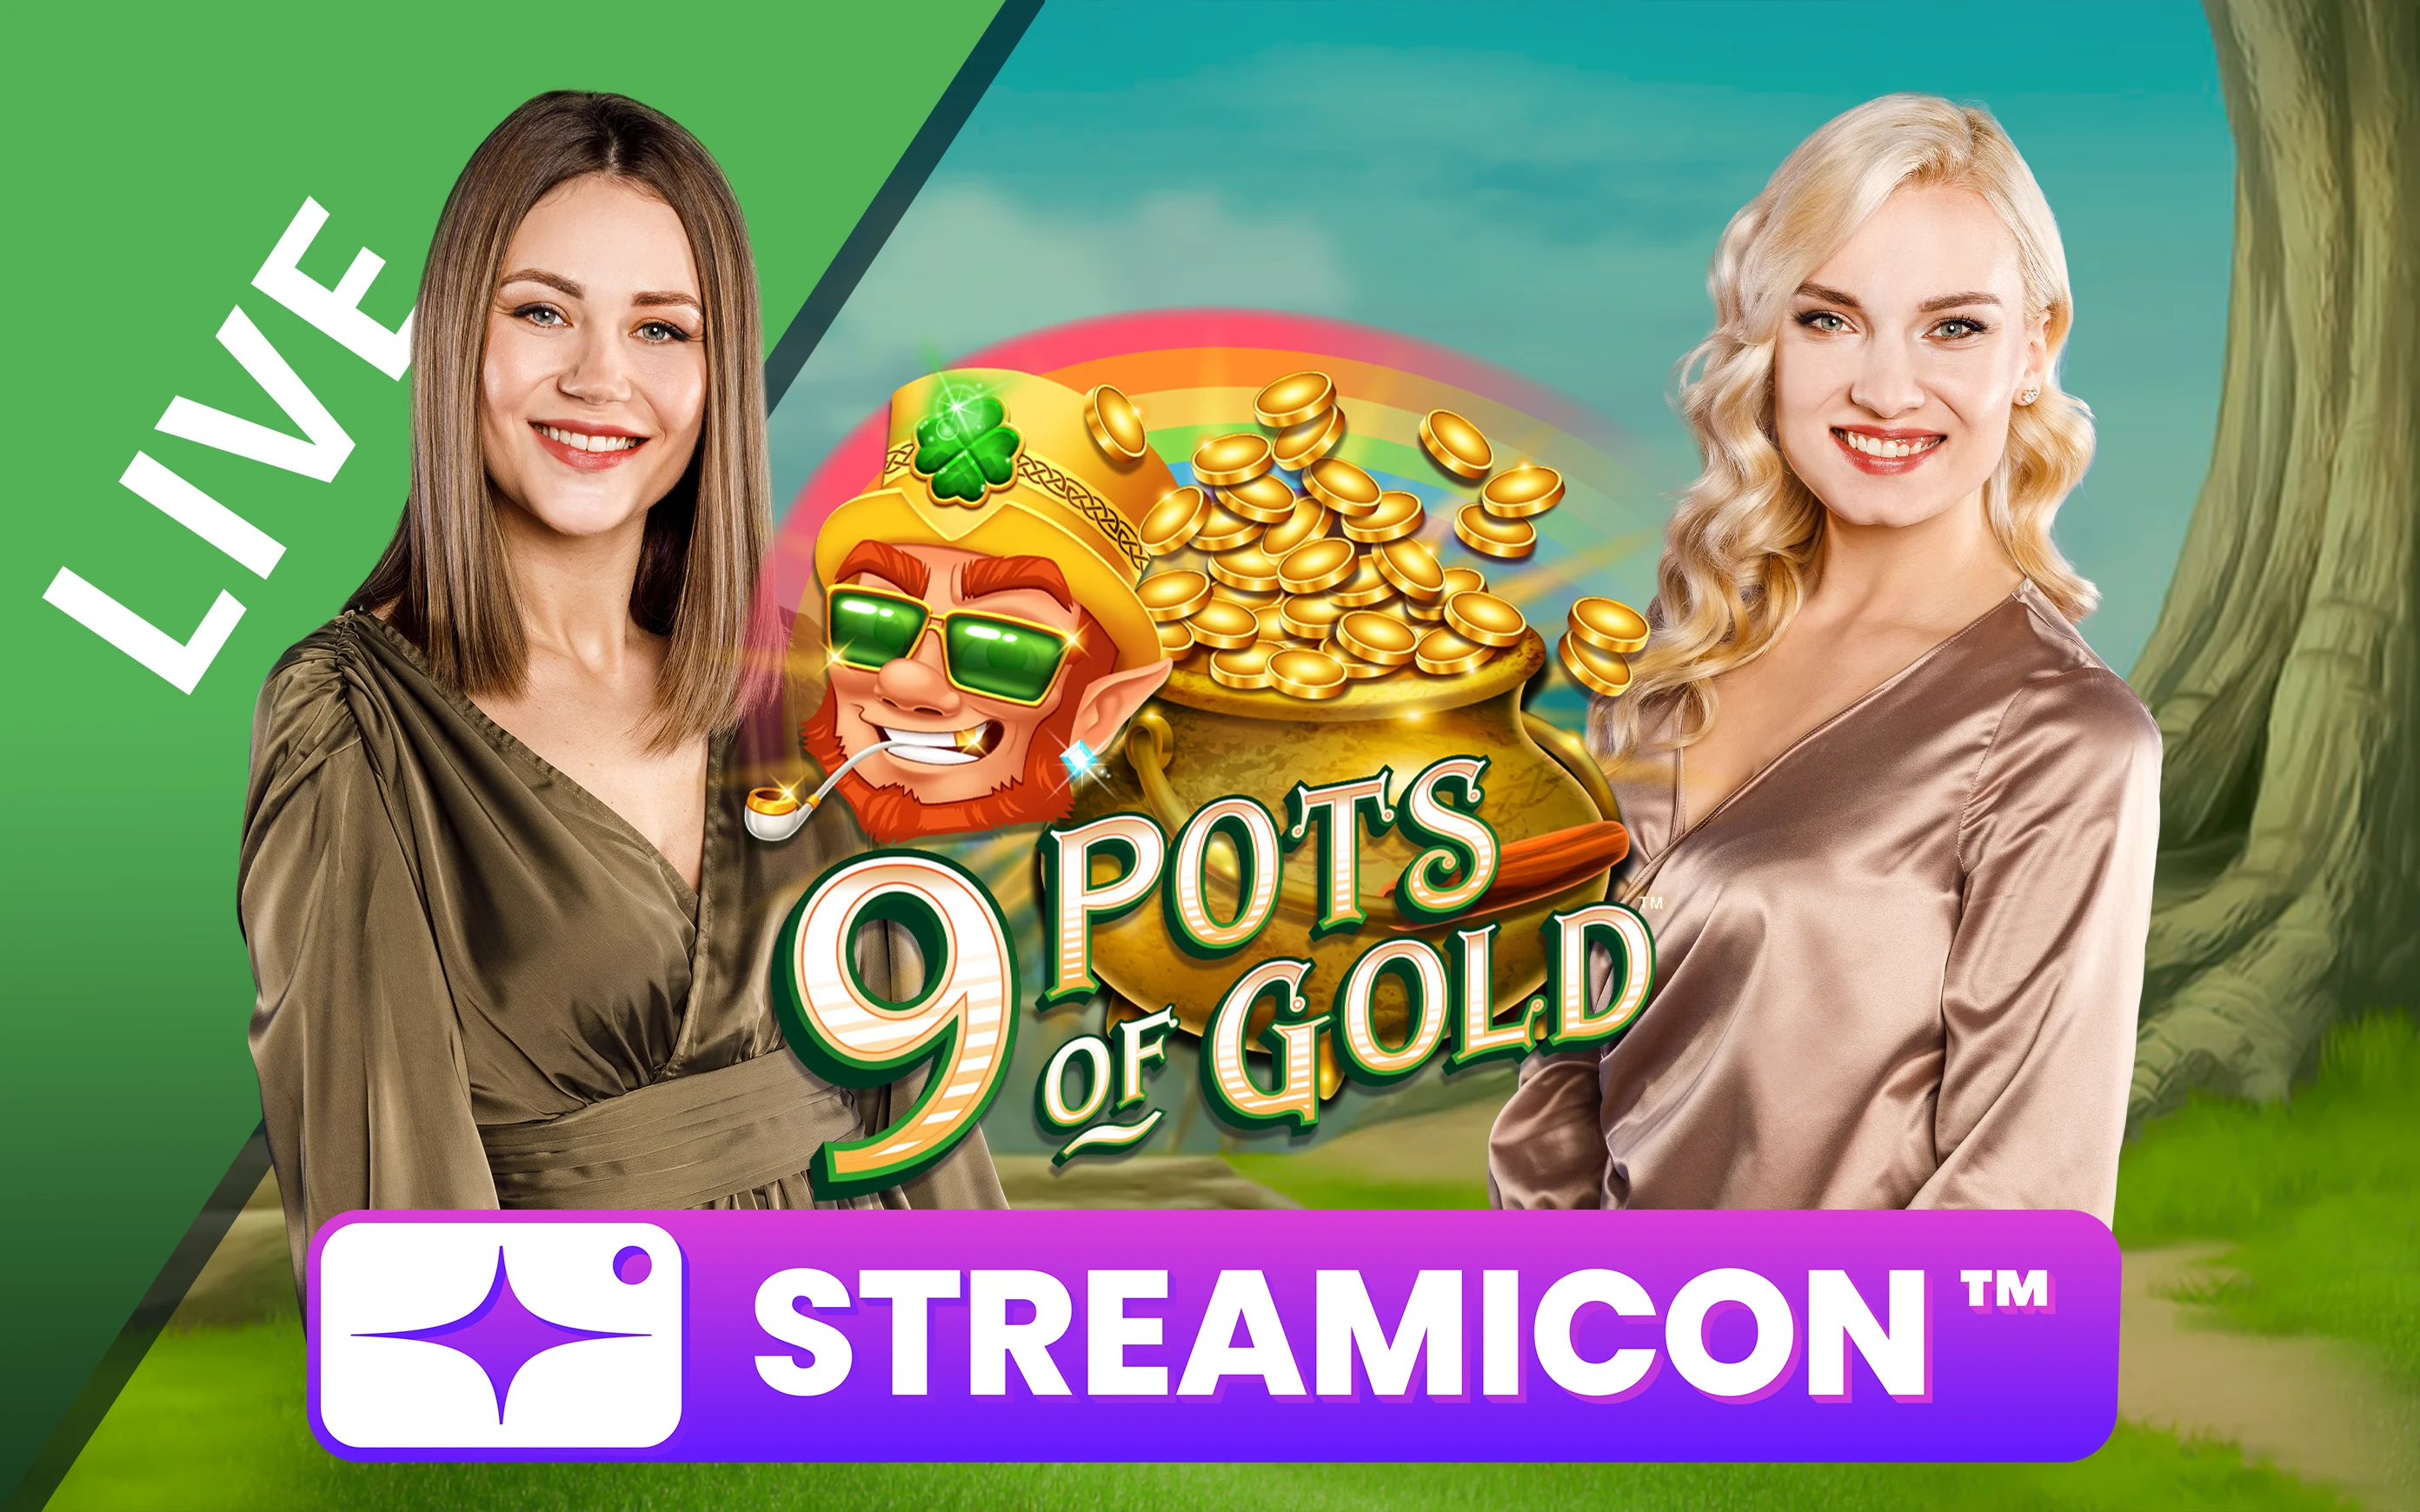 Играйте 9 Pots of Gold™ Streamicon™ на Starcasino.be онлайн казино